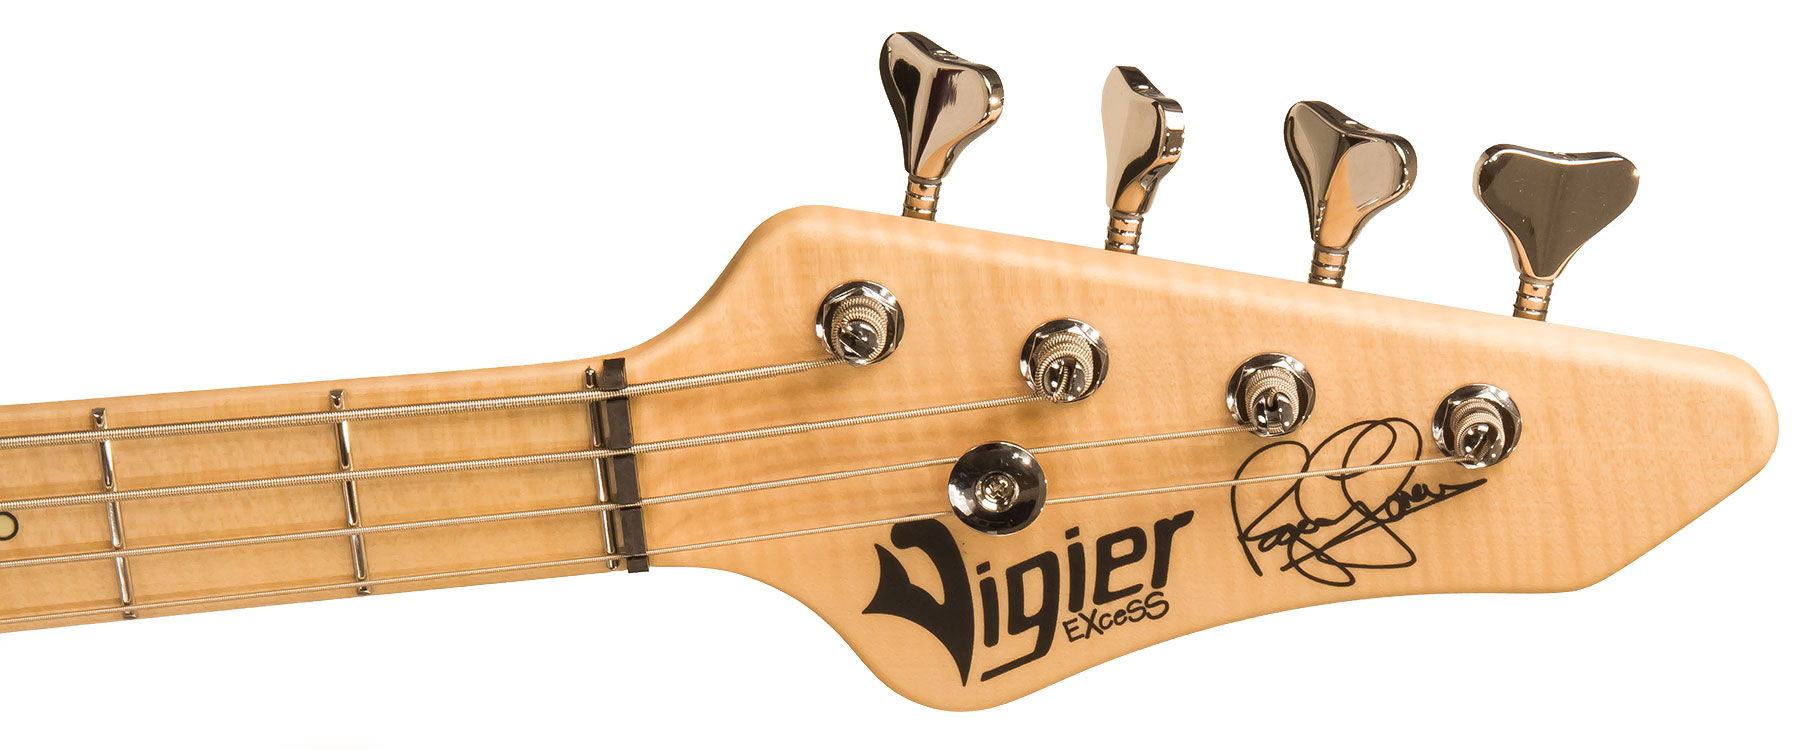 Vigier Roger Glover Excess Original Signature Active Rw - Clear Purple - Solidbody E-bass - Variation 4